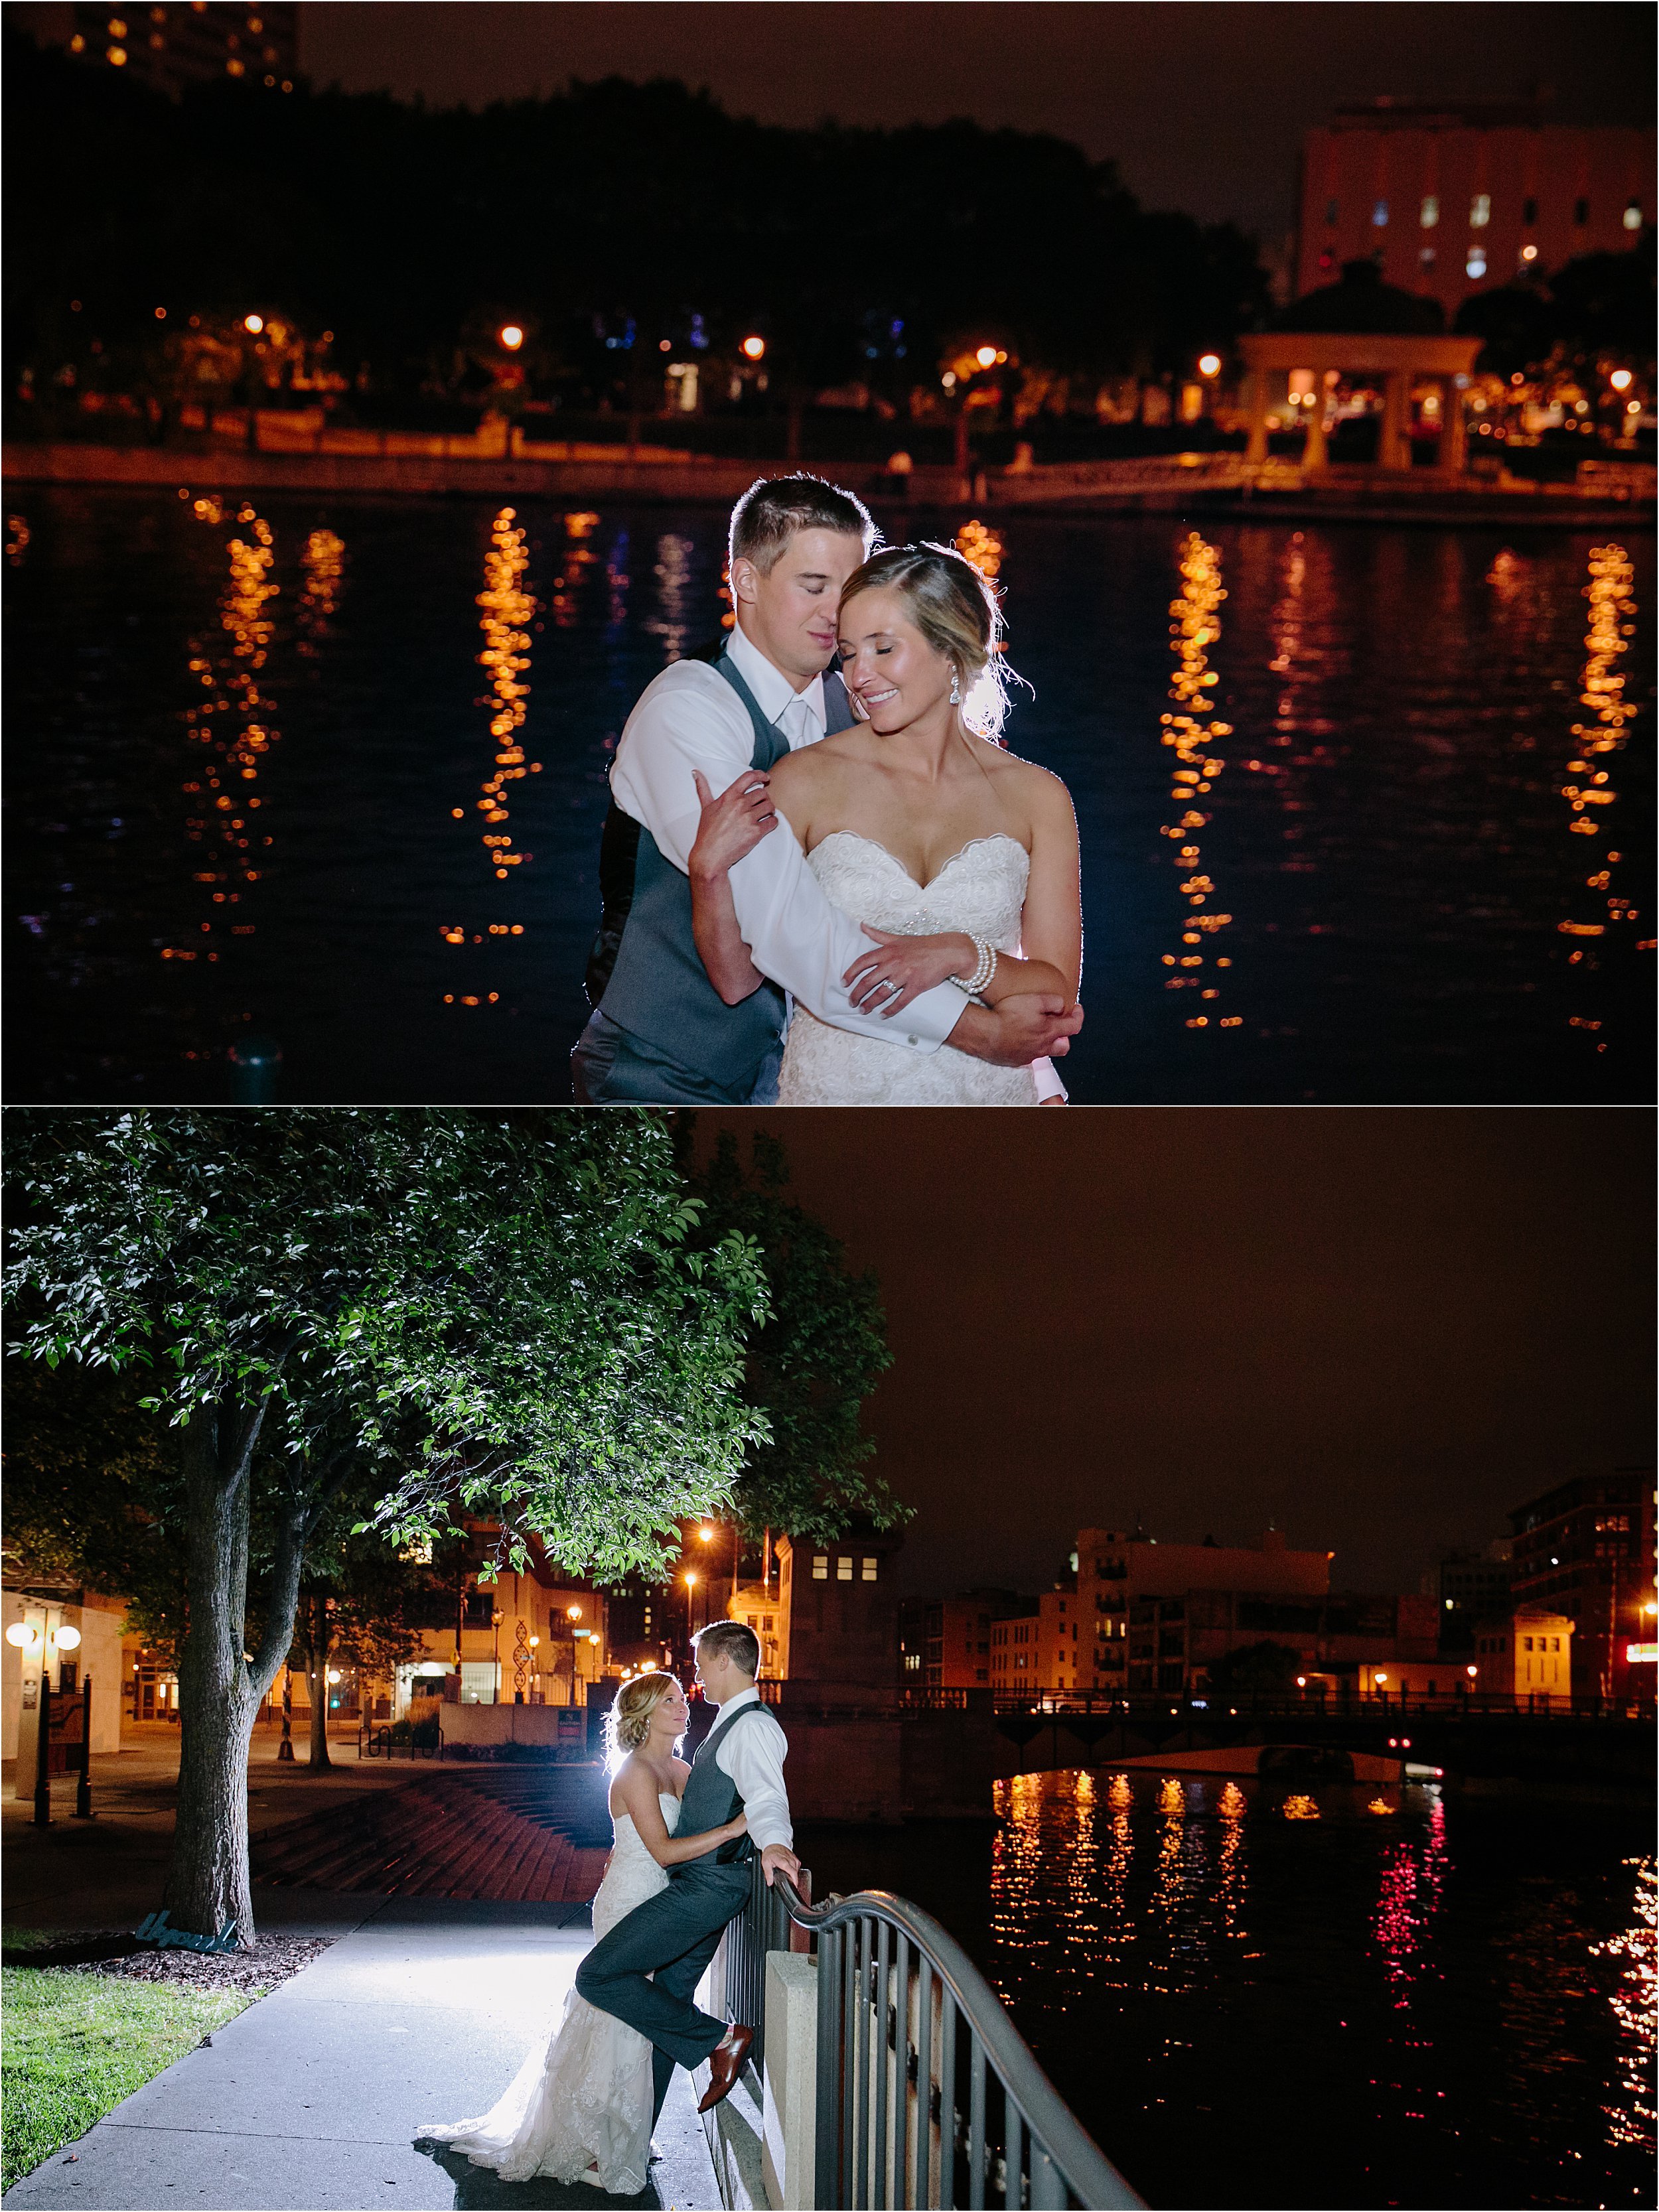 34-nighttime-bride-groom-downtown-river.JPG